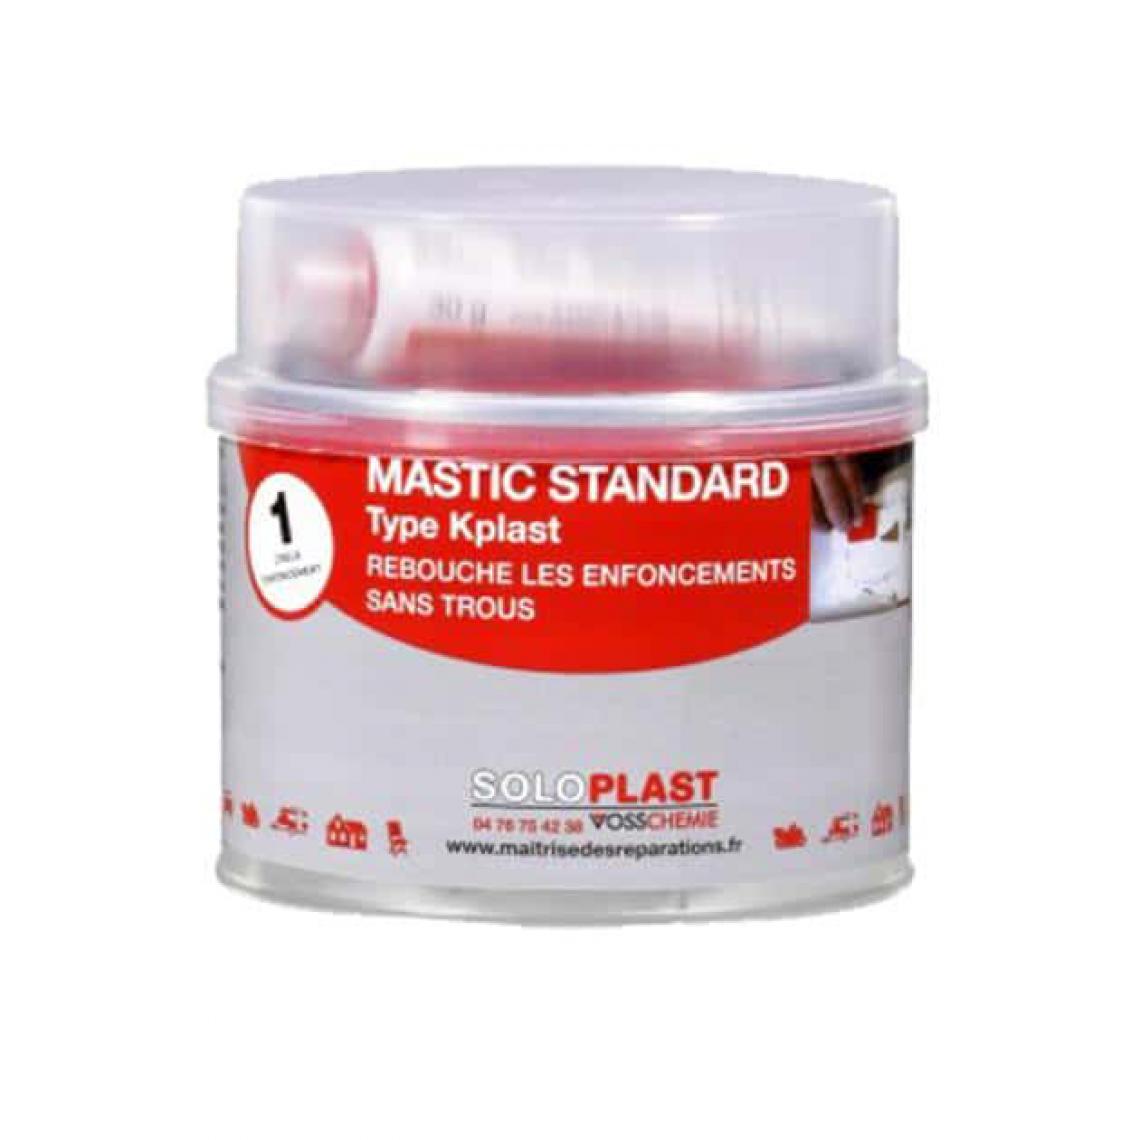 Soloplast - Mastic standard Soloplast Kplast 461g avec durcisseur - Colle & adhésif